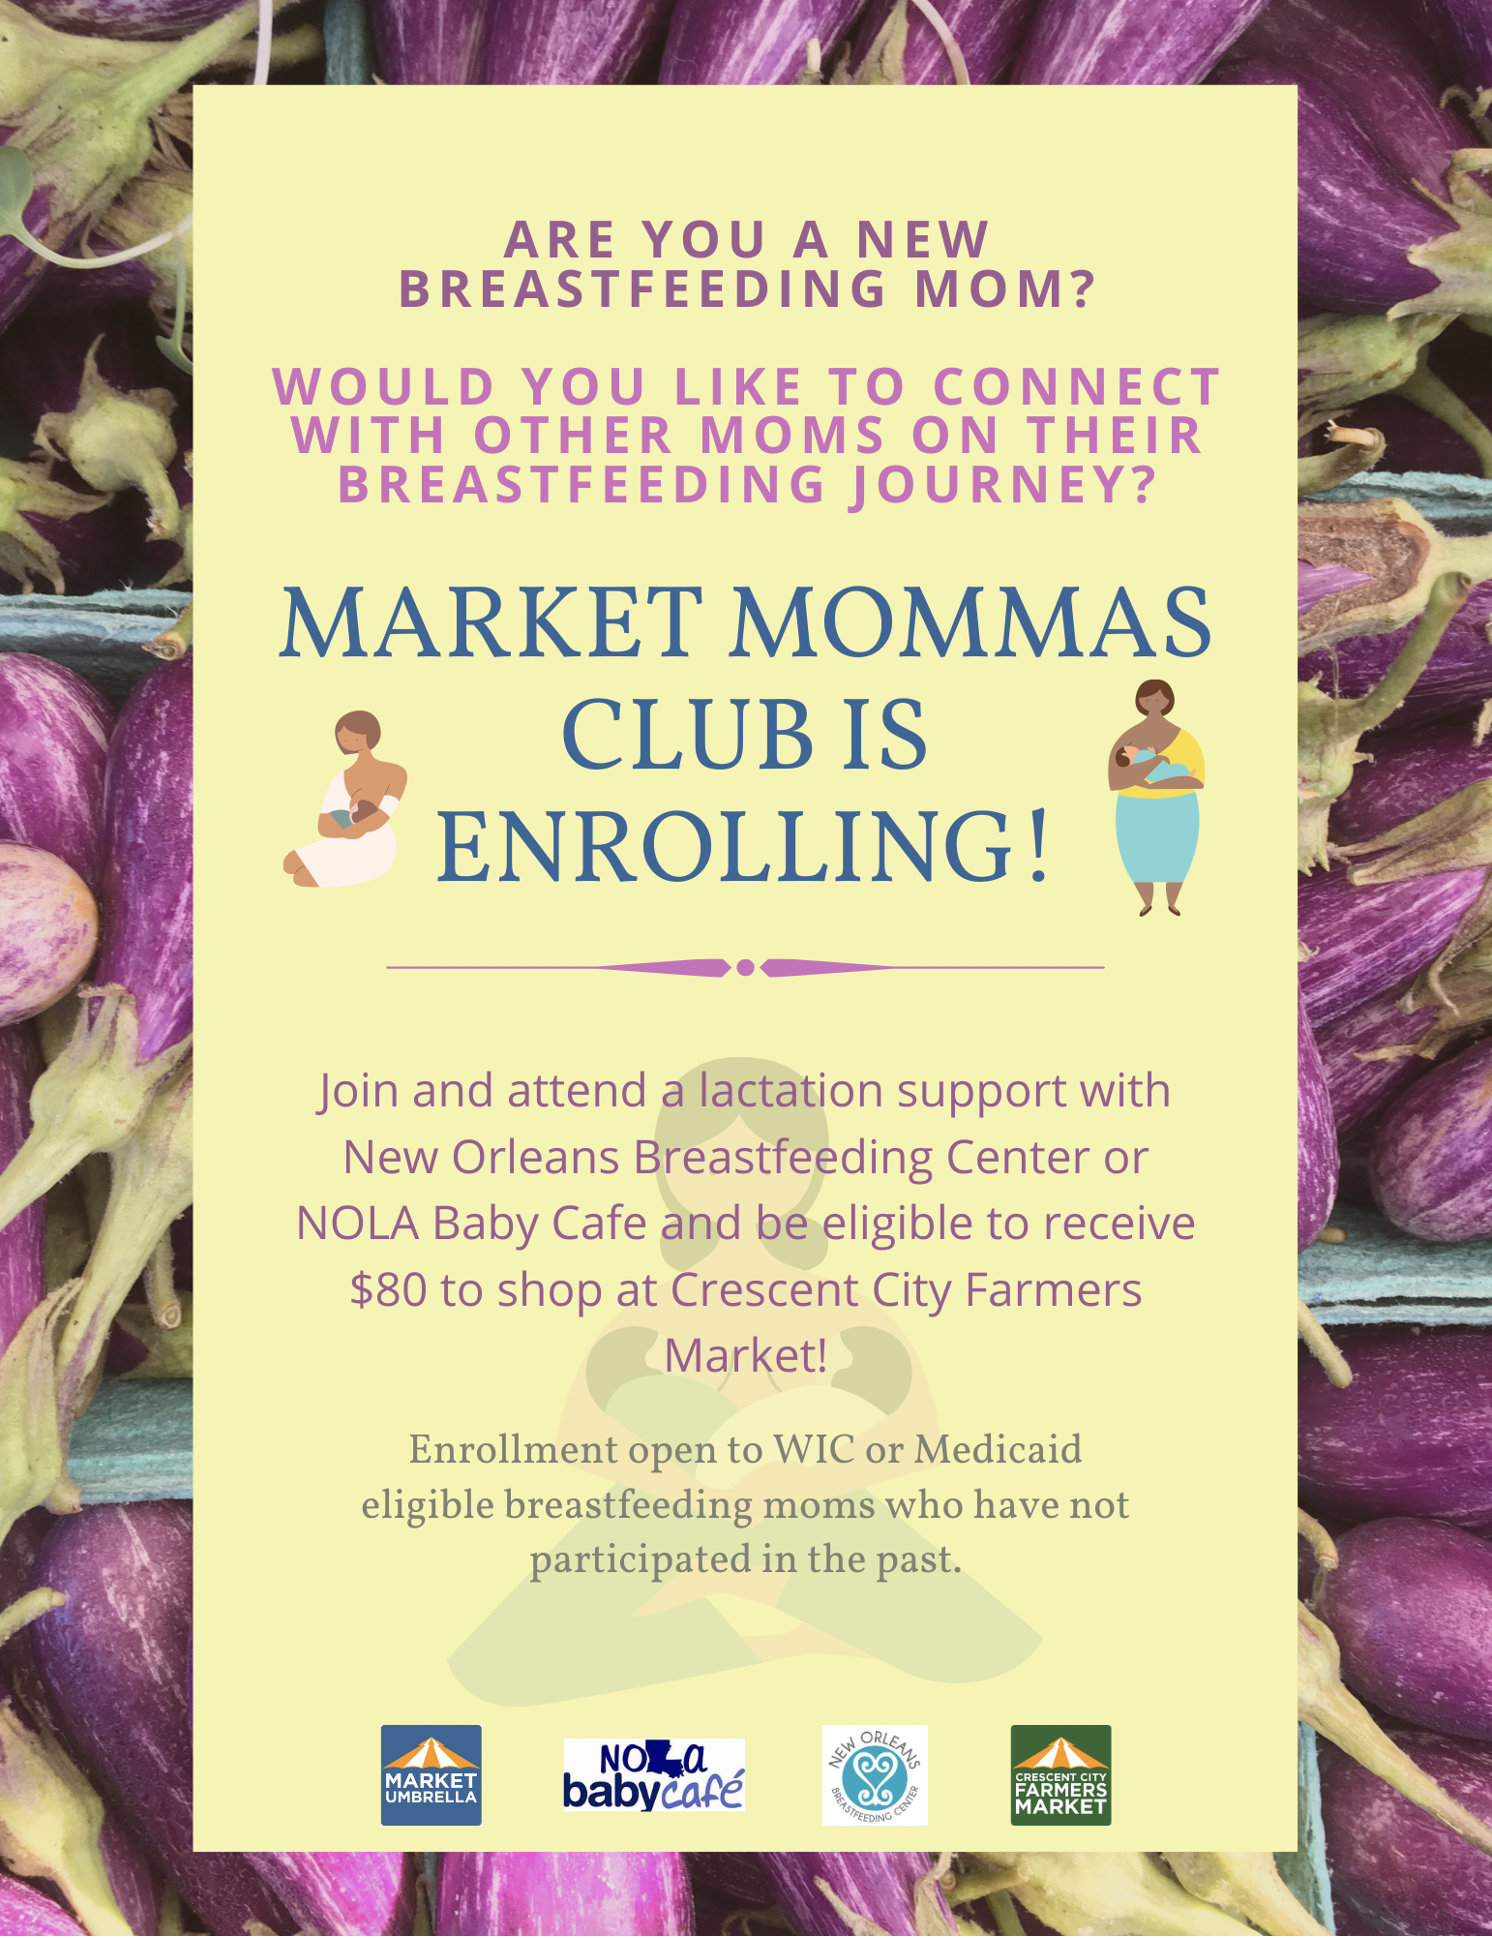 Market Mommas Club is Enrolling